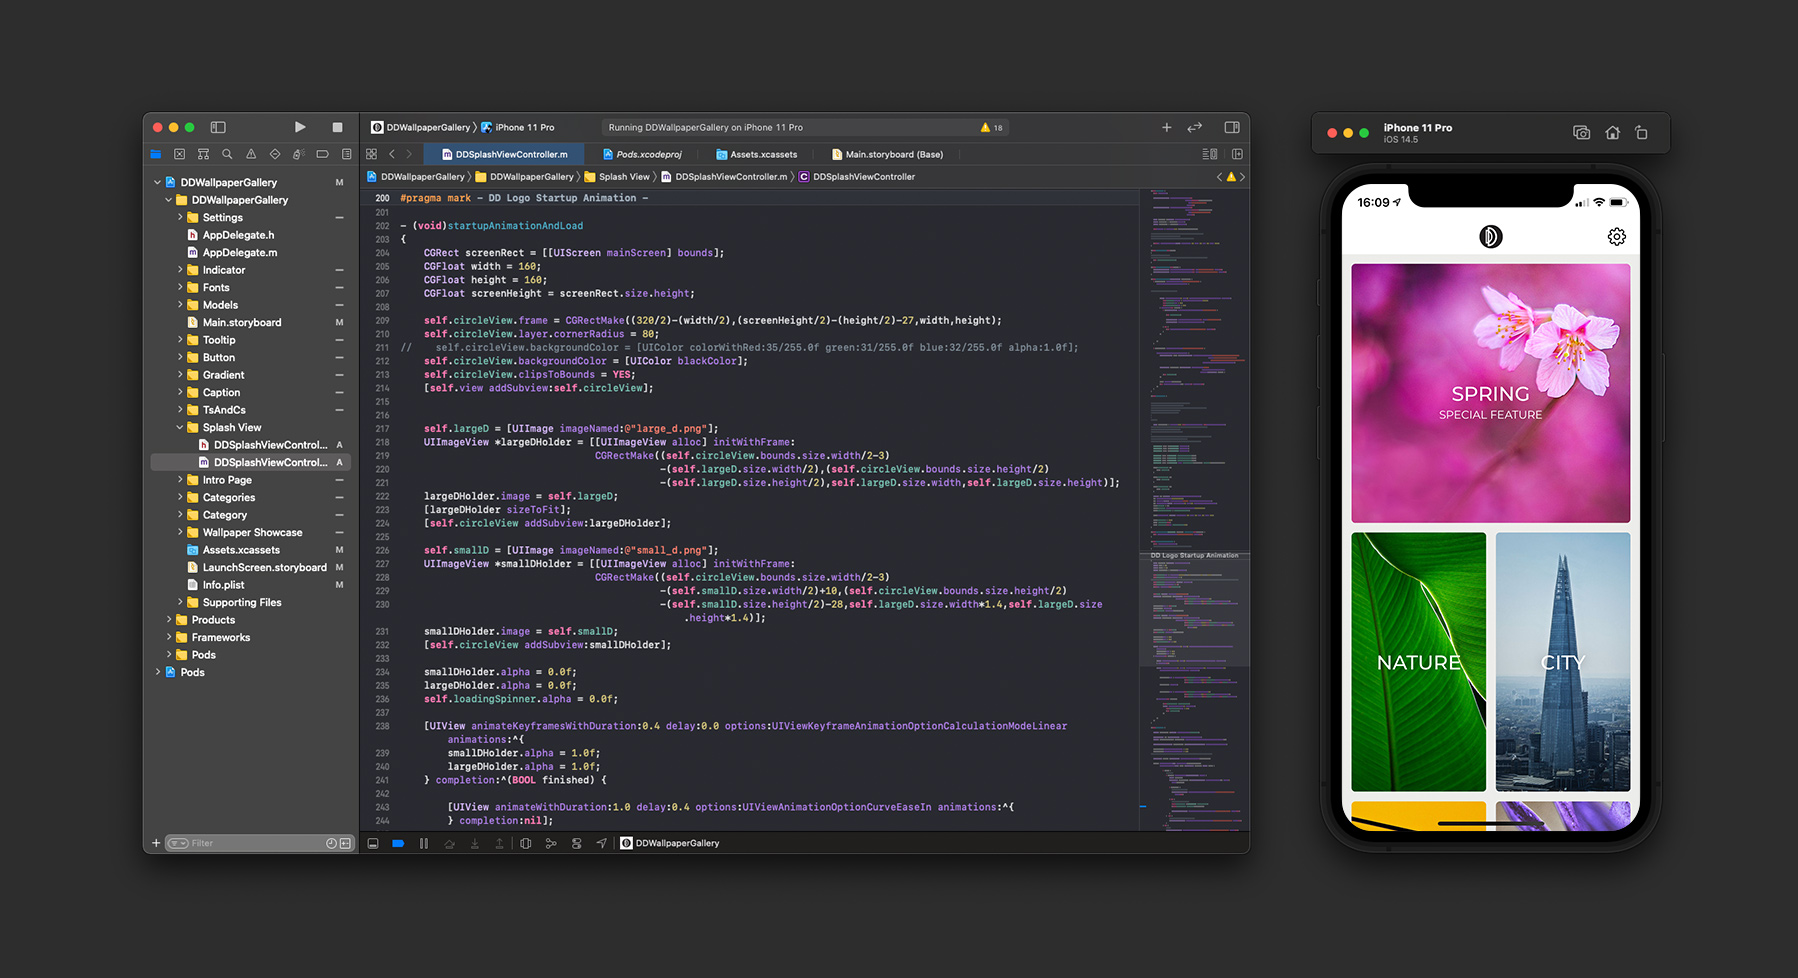 Xcode window of DD Wallpaper app.